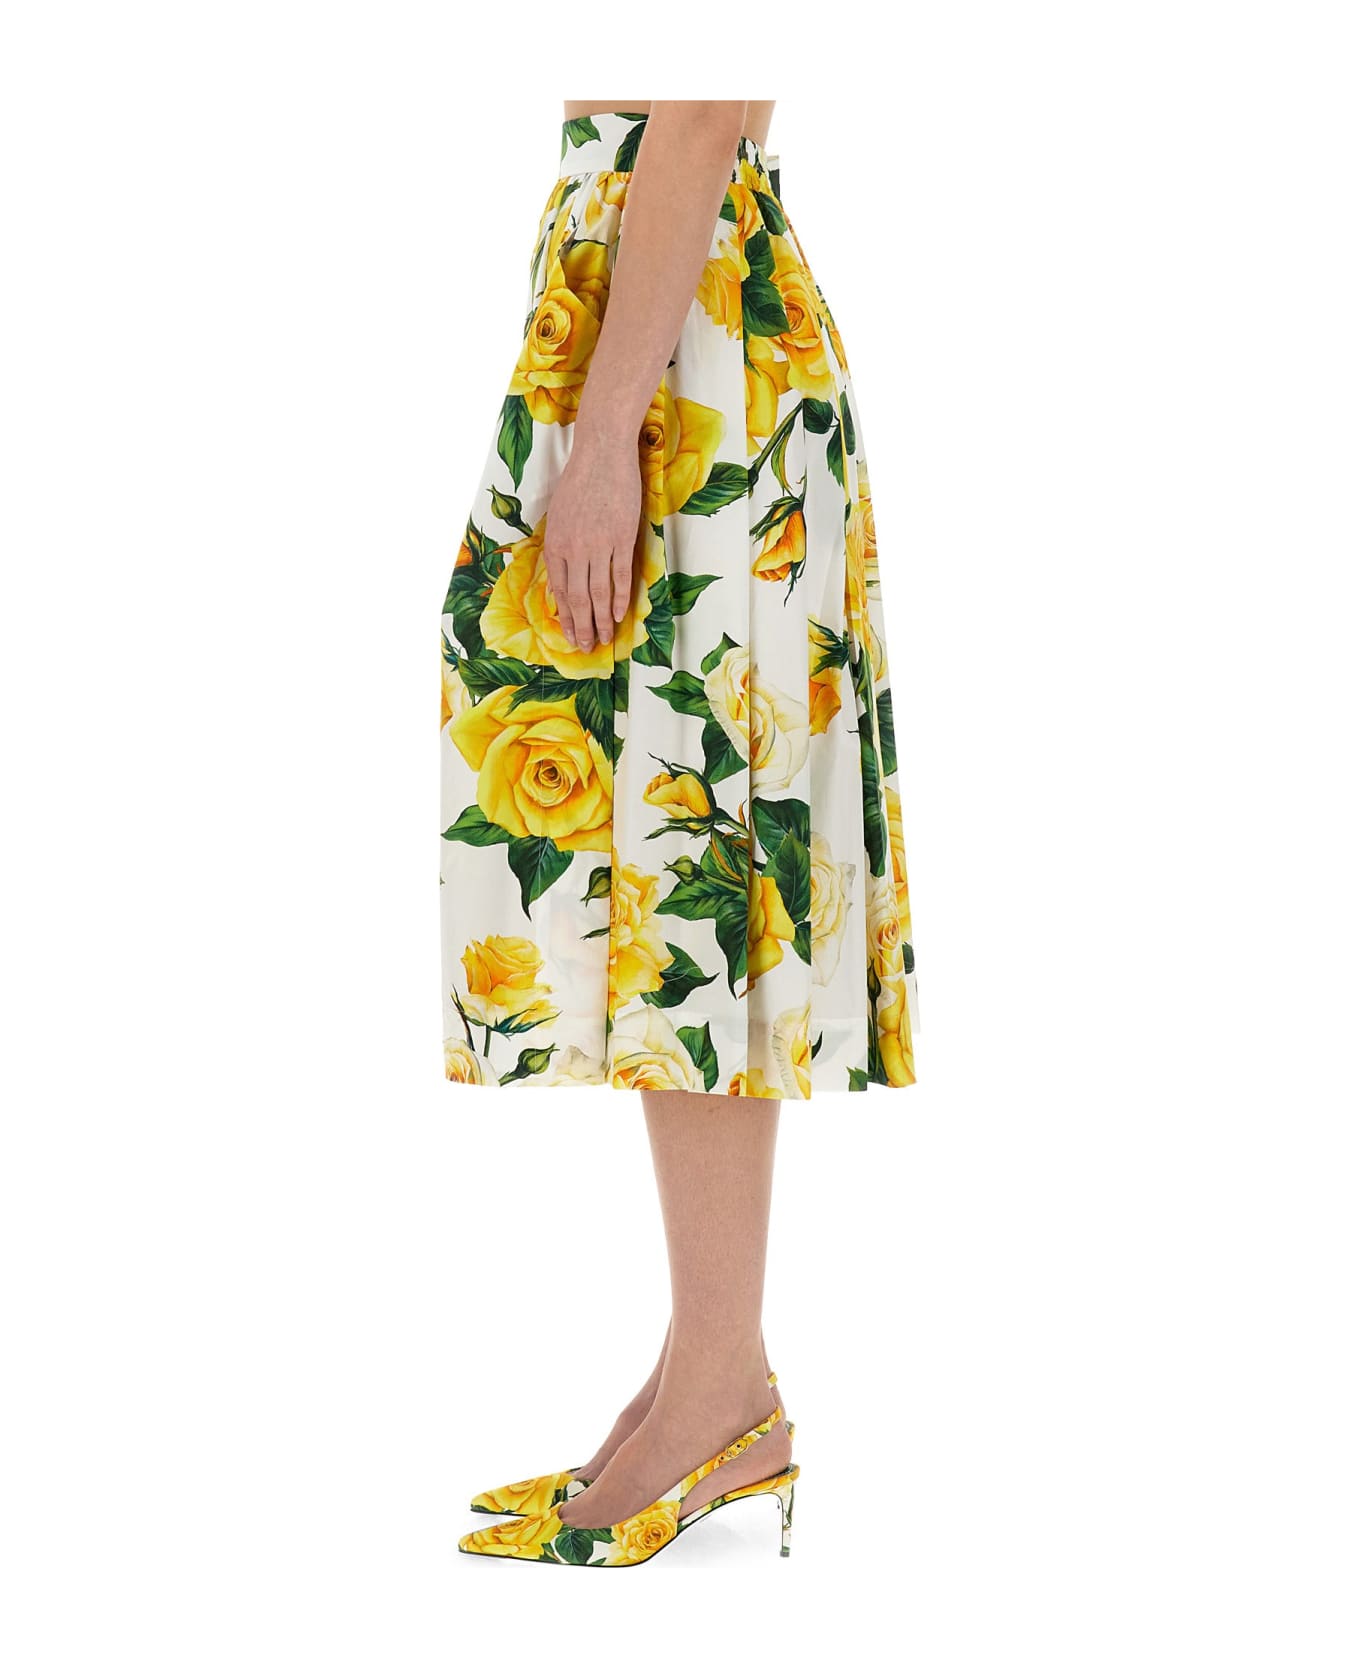 Dolce & Gabbana Flower Print Full Skirt - Dolce & Gabbana long-sleeved cotton shirt